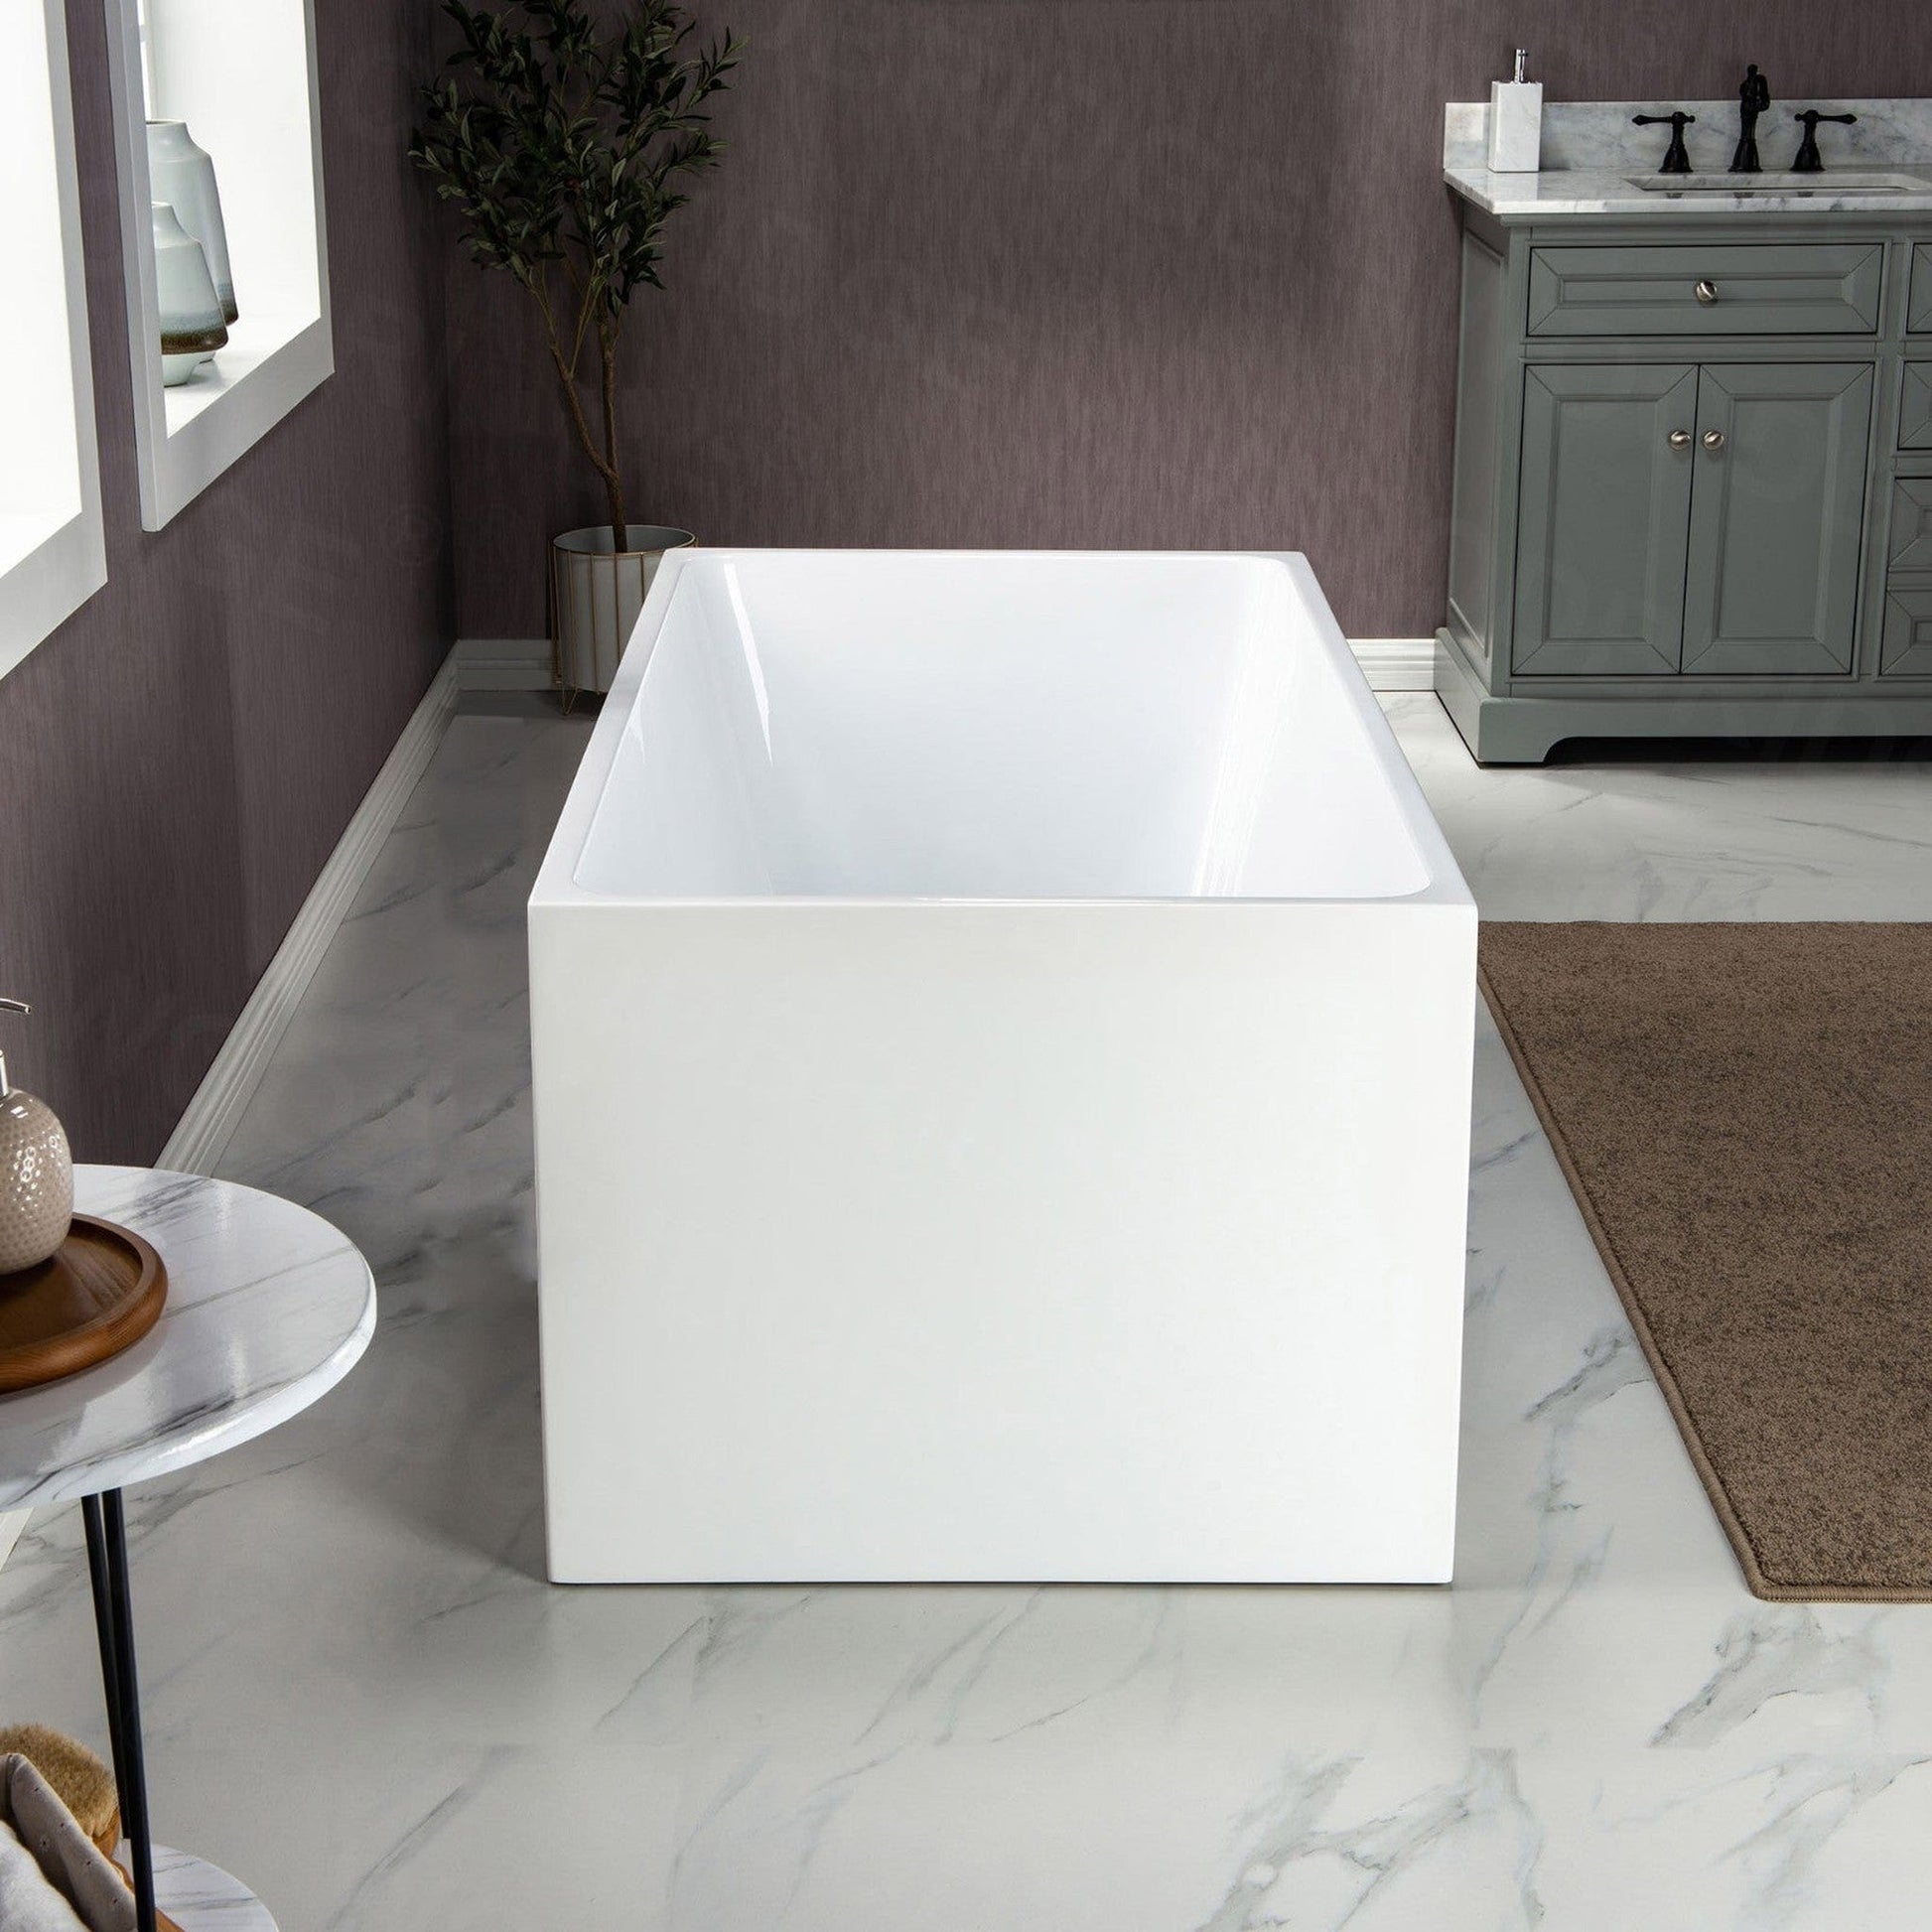 WoodBridge B-0085 59" White Acrylic Freestanding Soaking Bathtub With Matte Black Drain, Overflow, F0072MBVT Tub Filler and Caddy Tray